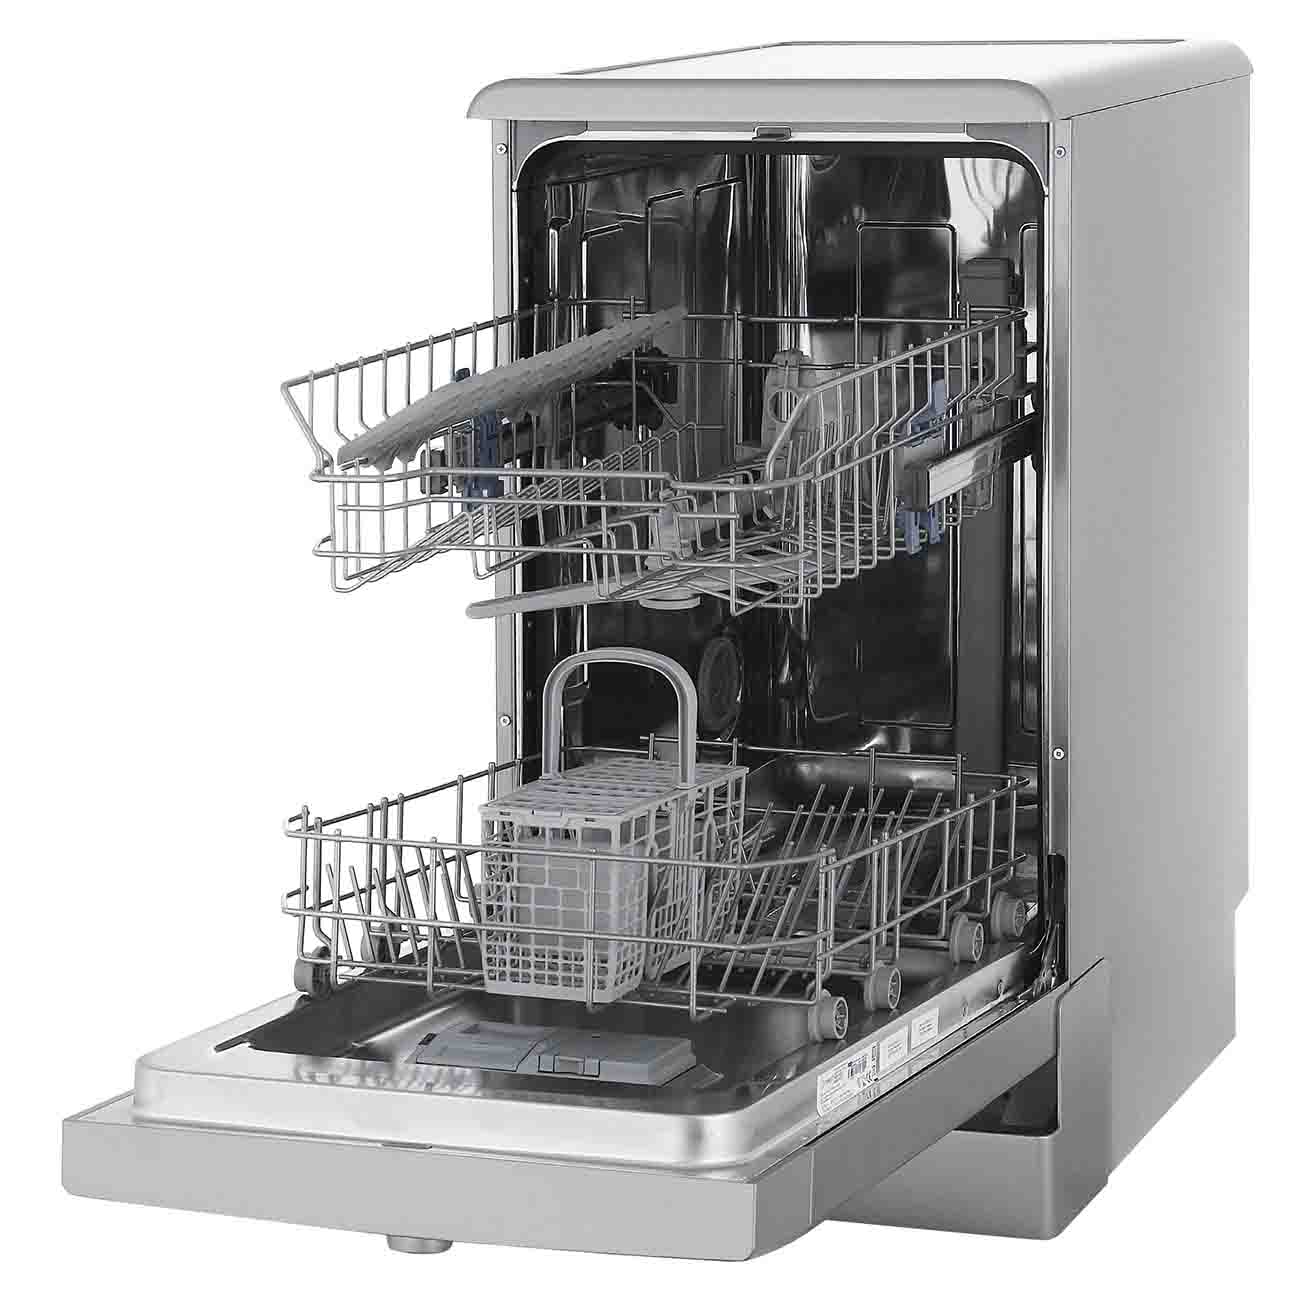 Посудомоечная машина индезит 45 см. Посудомоечная машина (45 см) Hotpoint-Ariston HSFE 1b0 c s. Посудомоечная машина Хотпоинт Аристон 45.